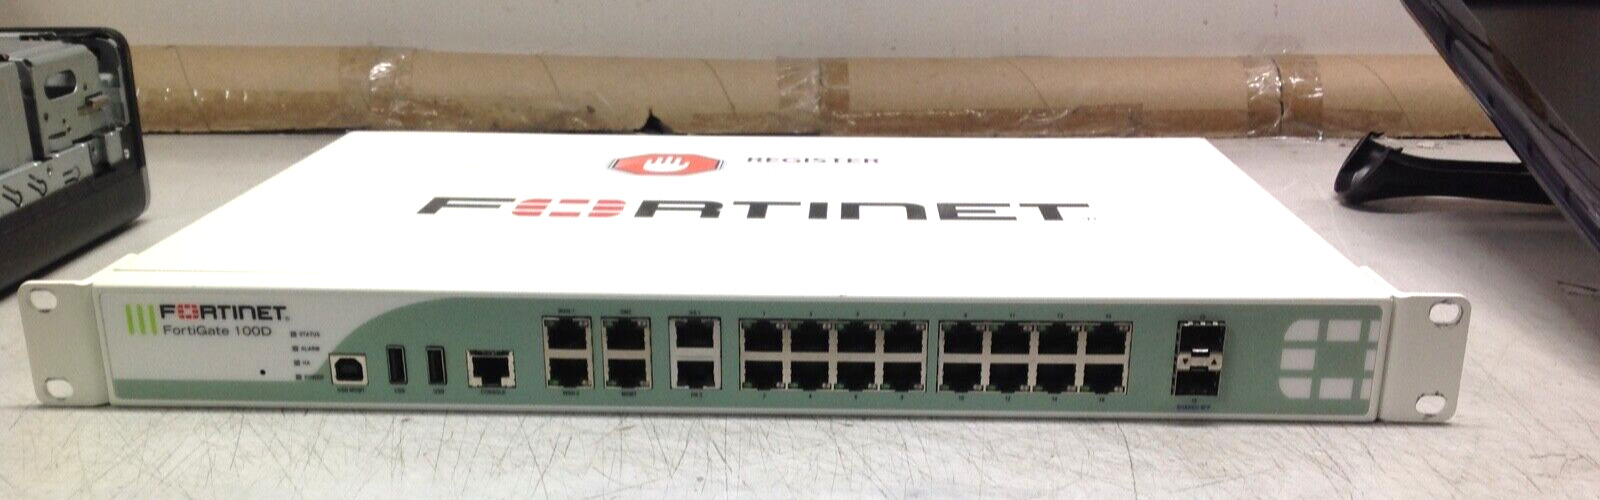 Fortinet Fortigate 100D FG-100D Network Security Firewall Appliance #2